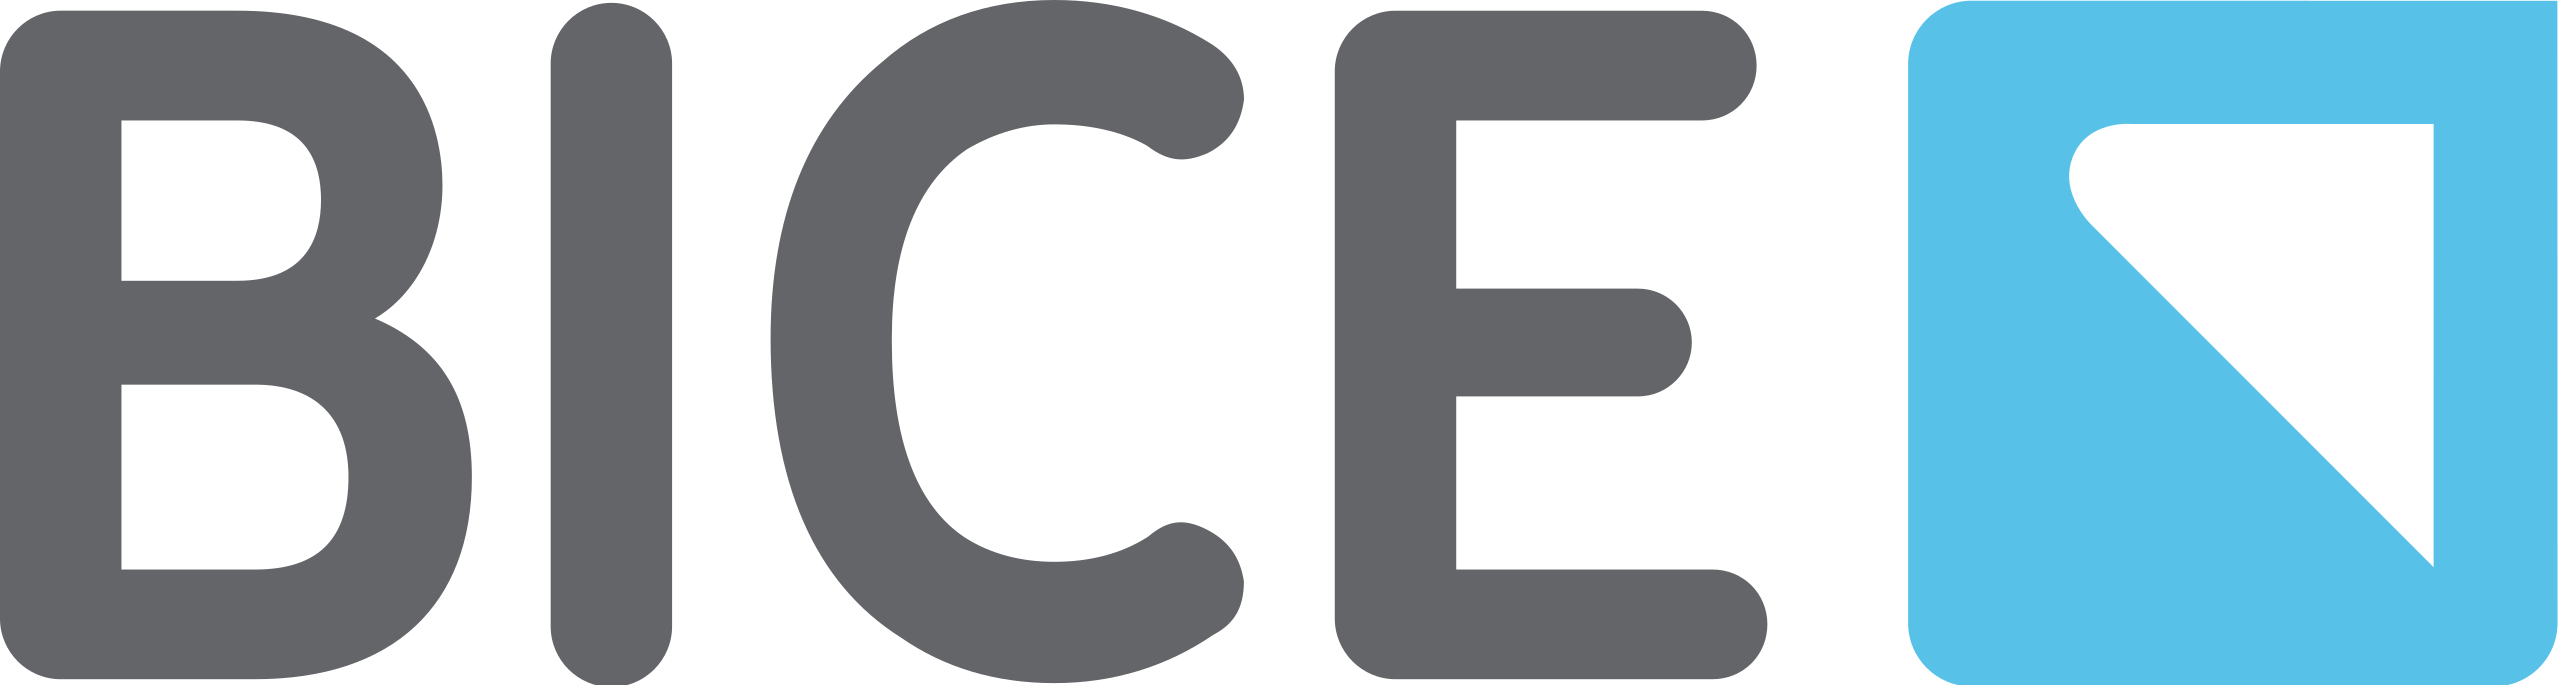 Bice-logo.svg.png